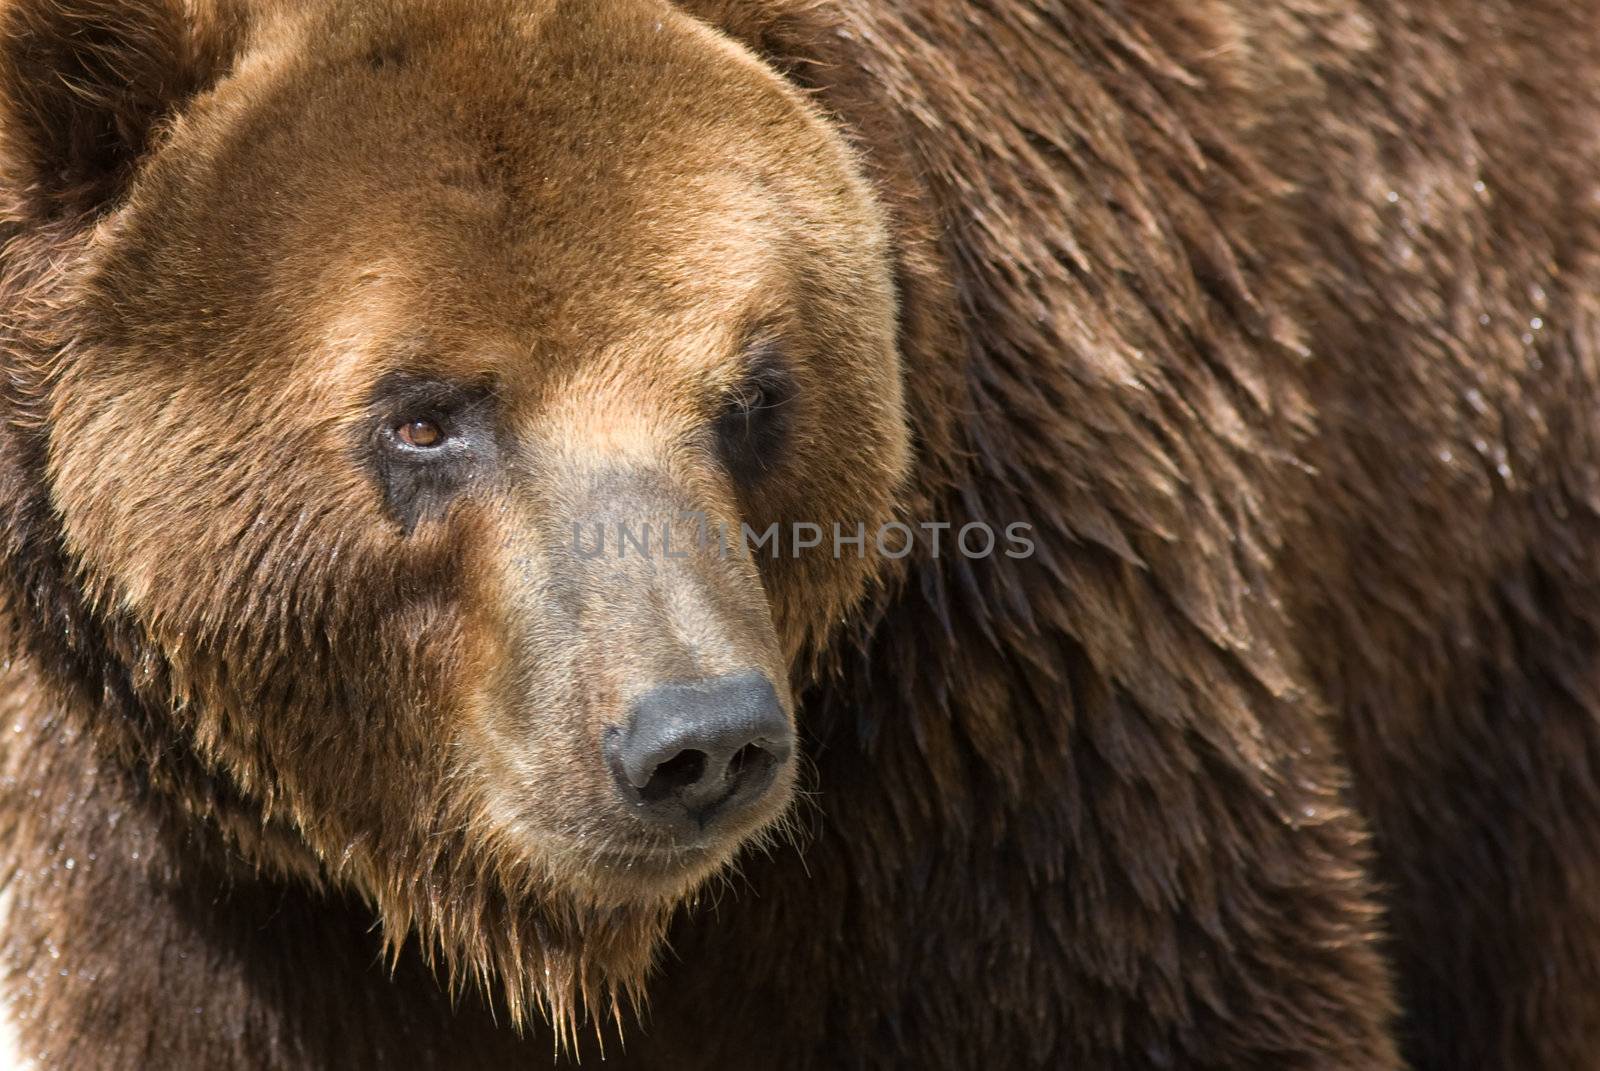 Giant brown bear